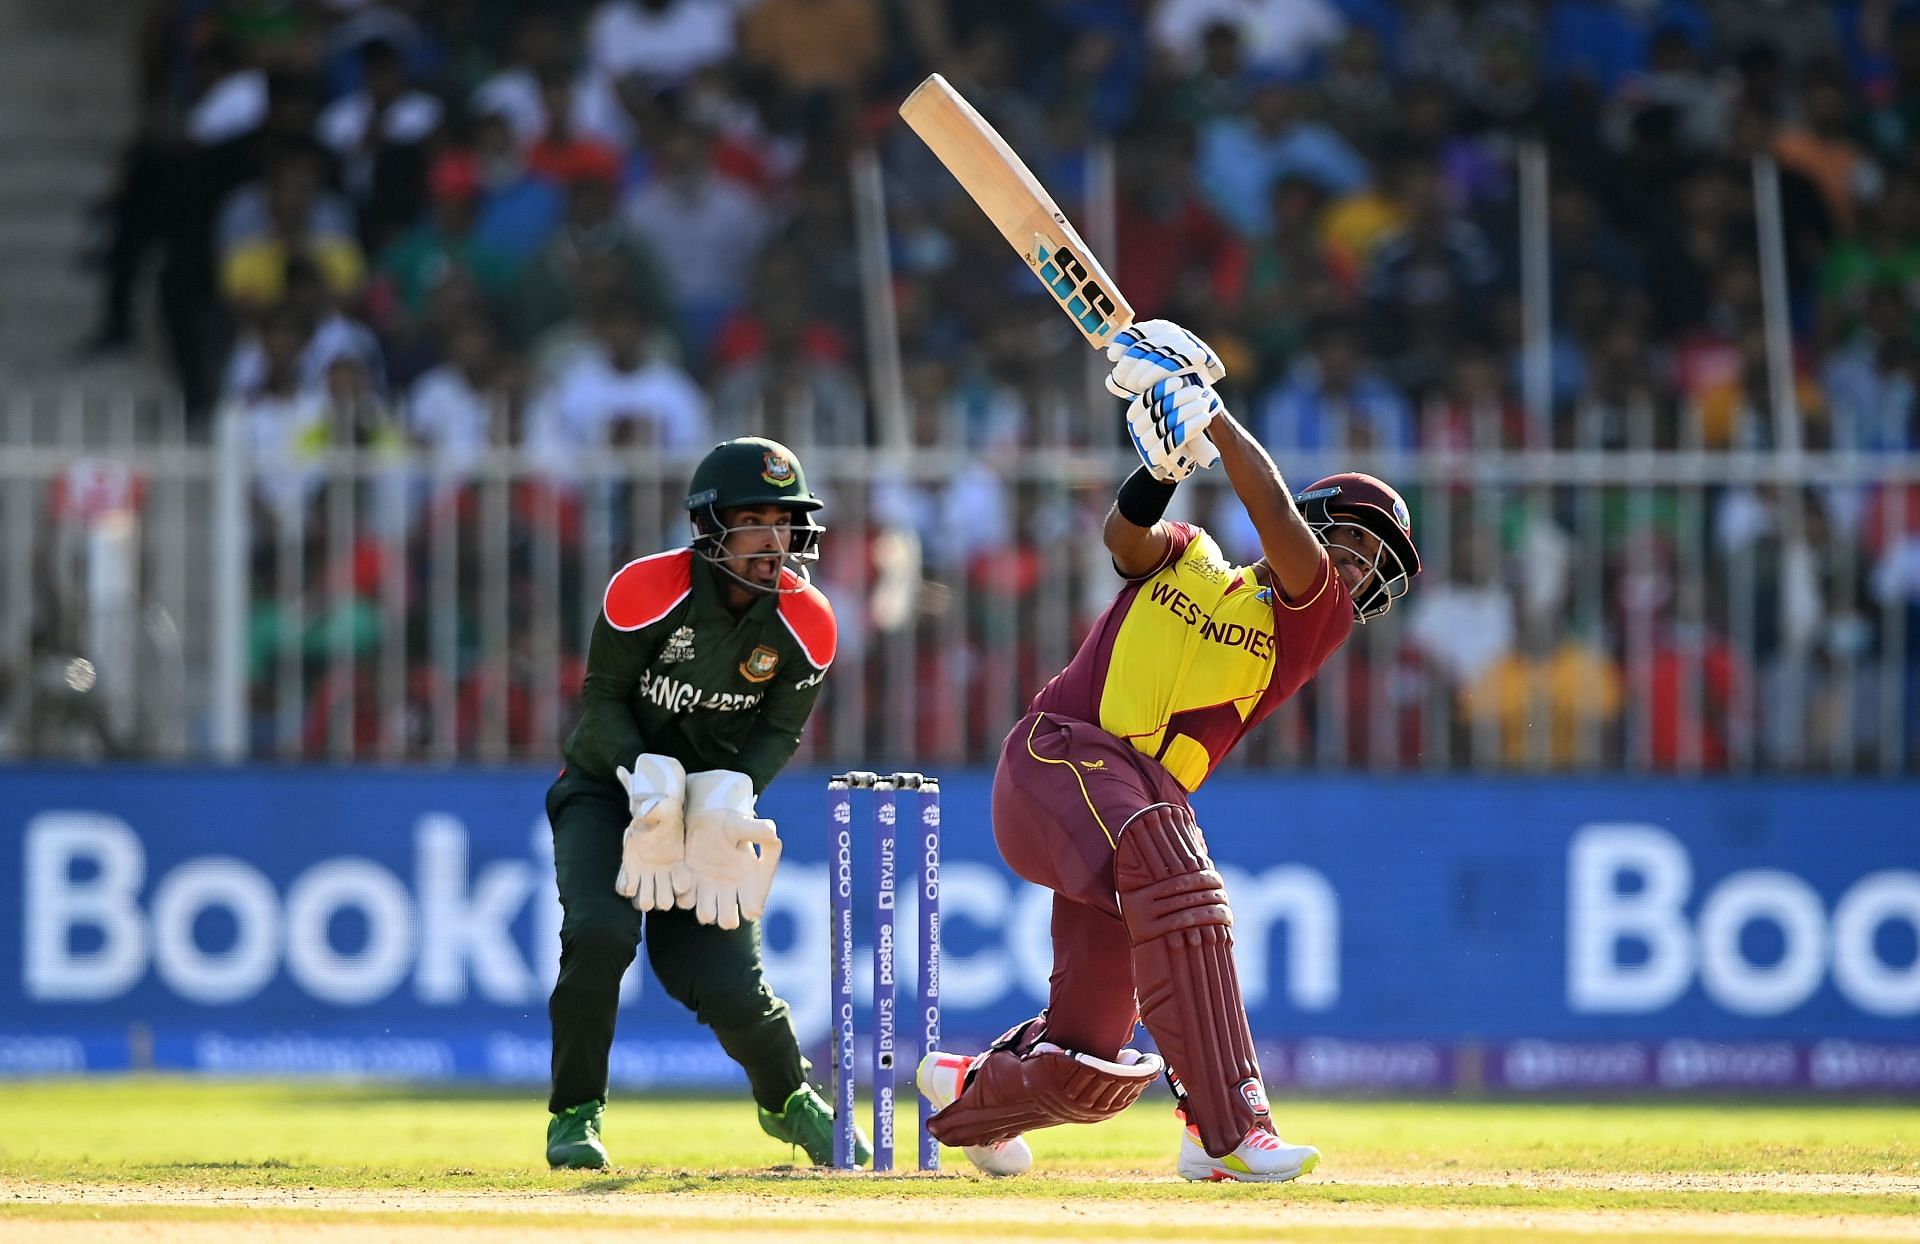 Nicholas Pooran batting against Bangladesh. Pic: Getty Images